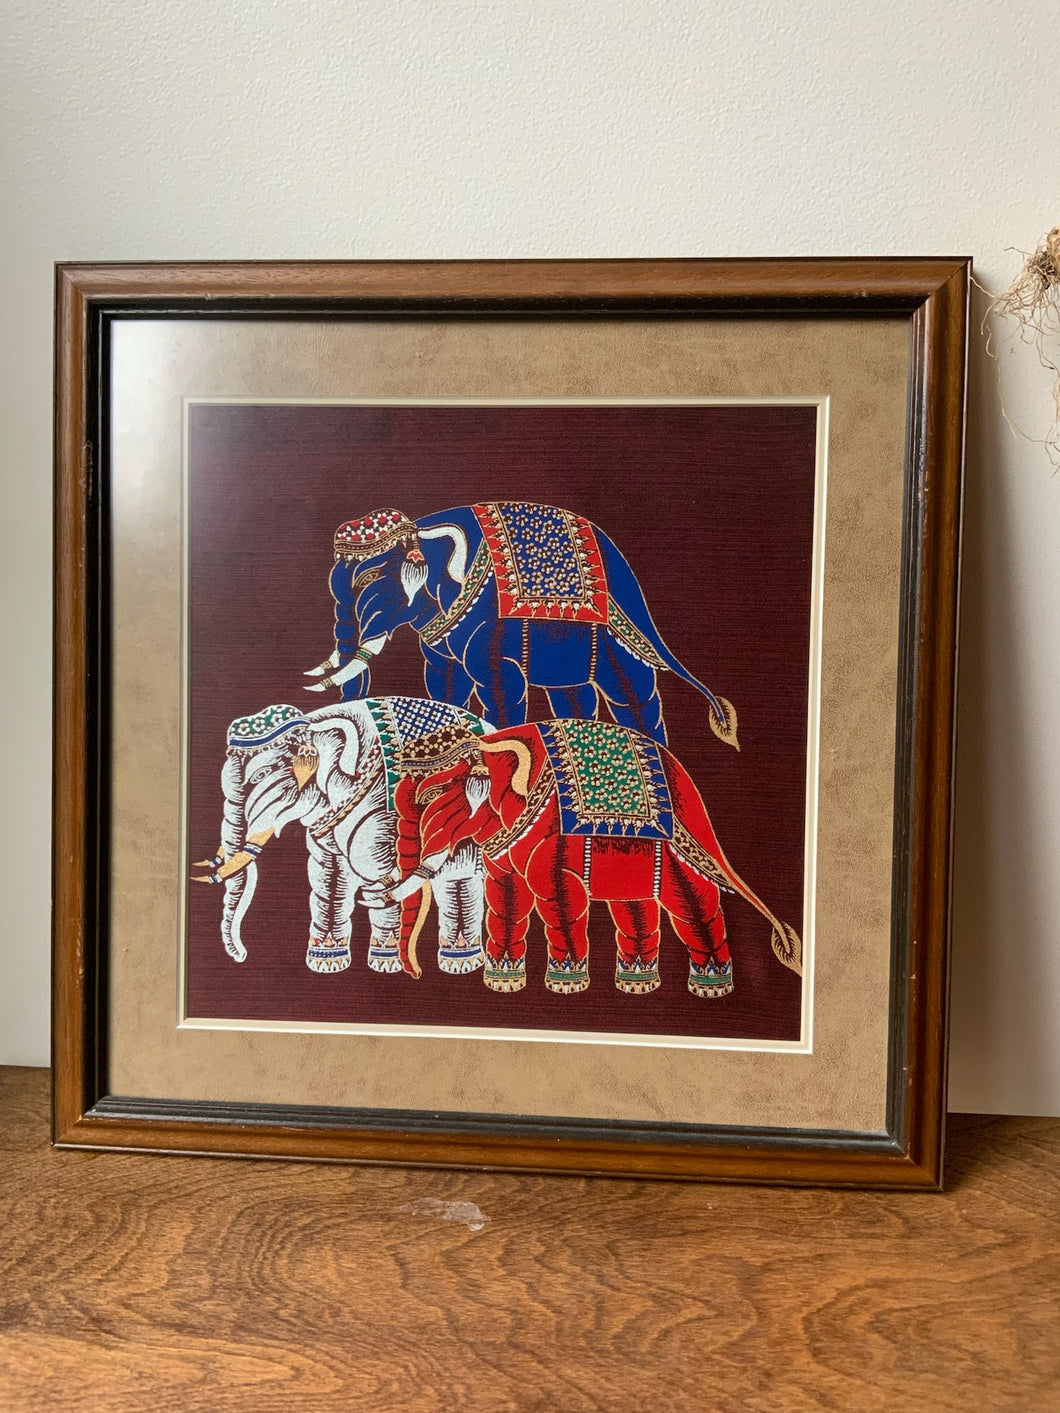 Gorgeous Framed Textile Patchwork Art Of Elephants